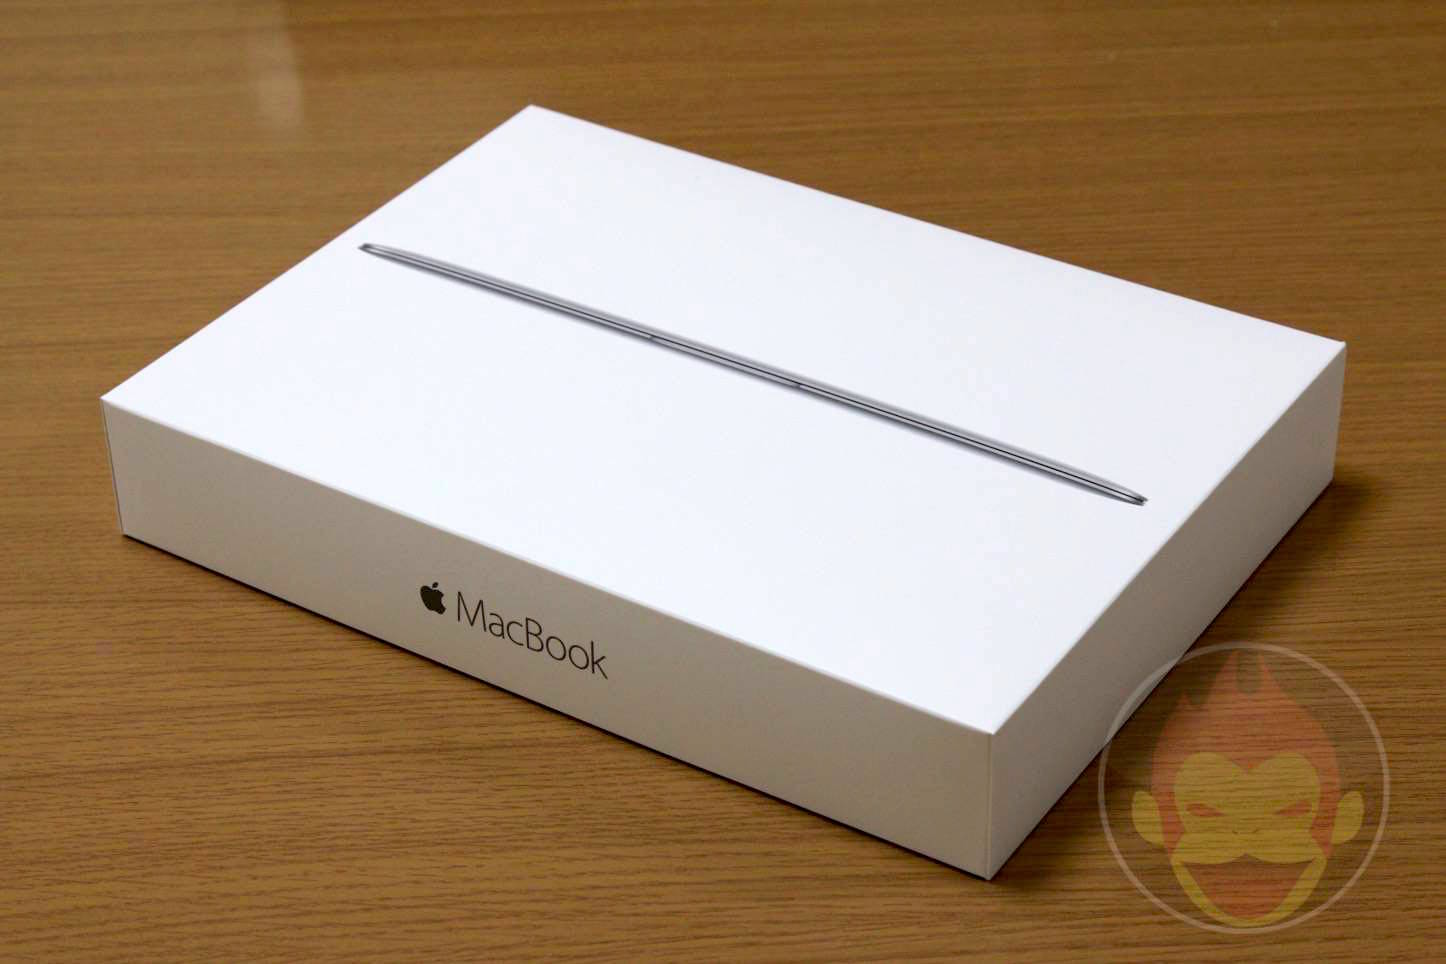 12inch-The-New-MacBook-04.JPG